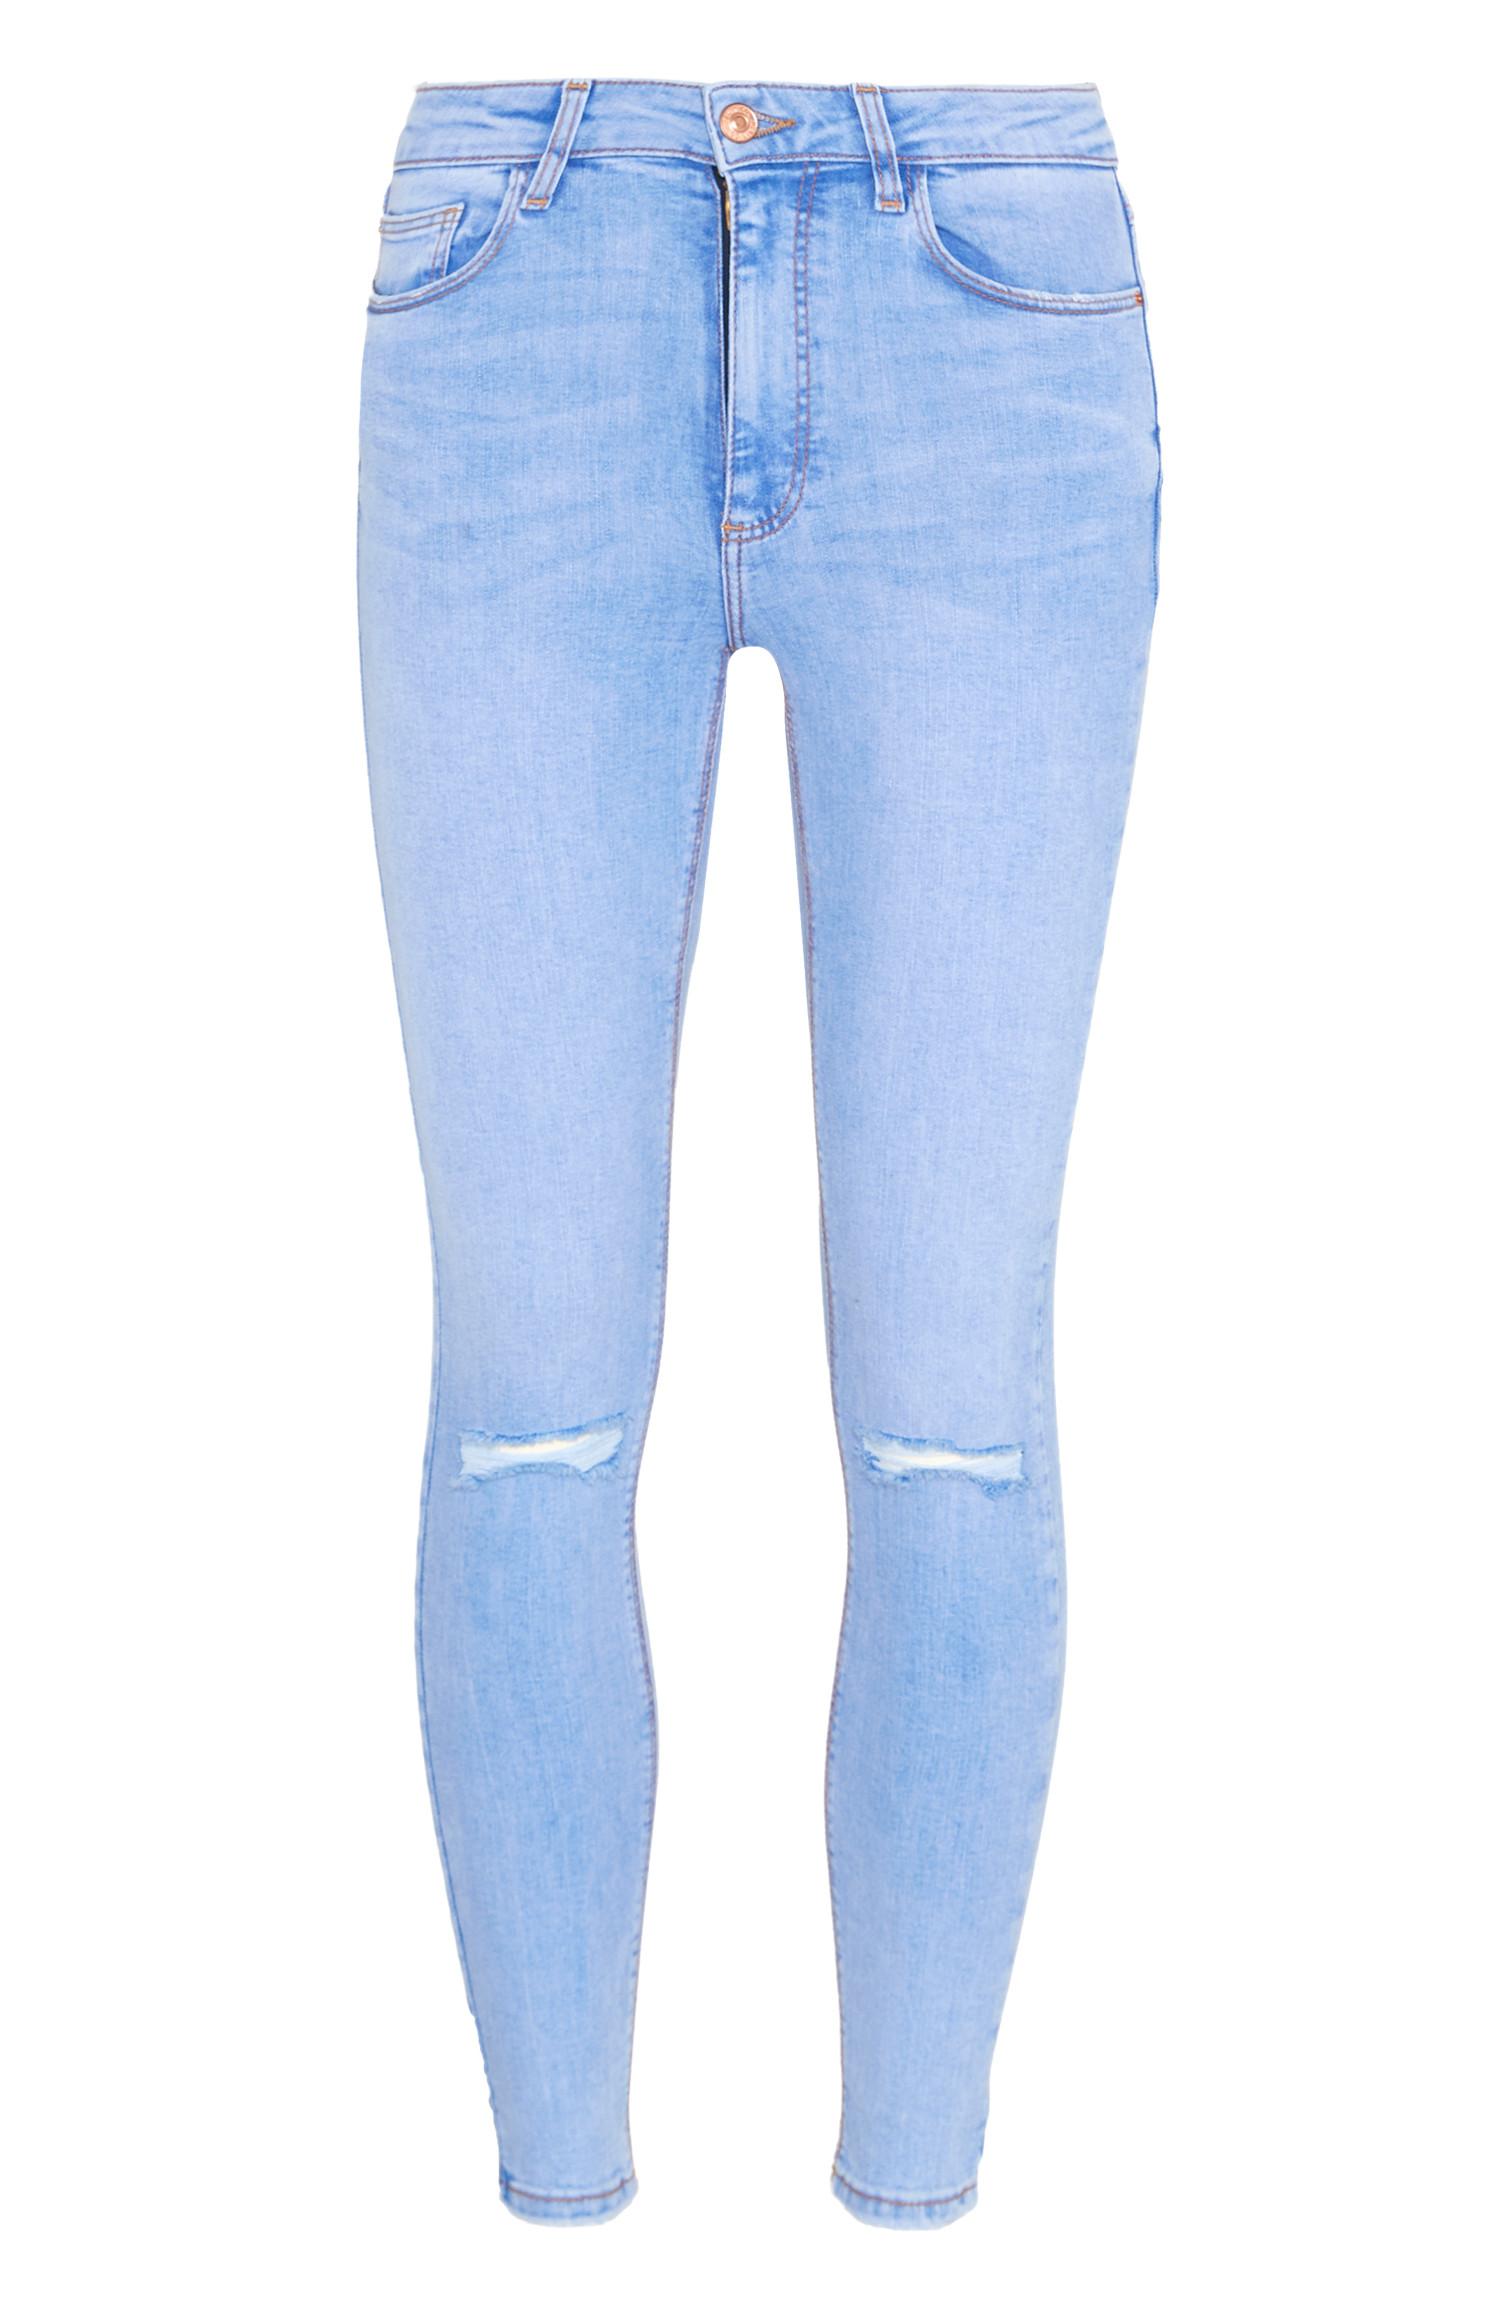 light blue ripped jeans women